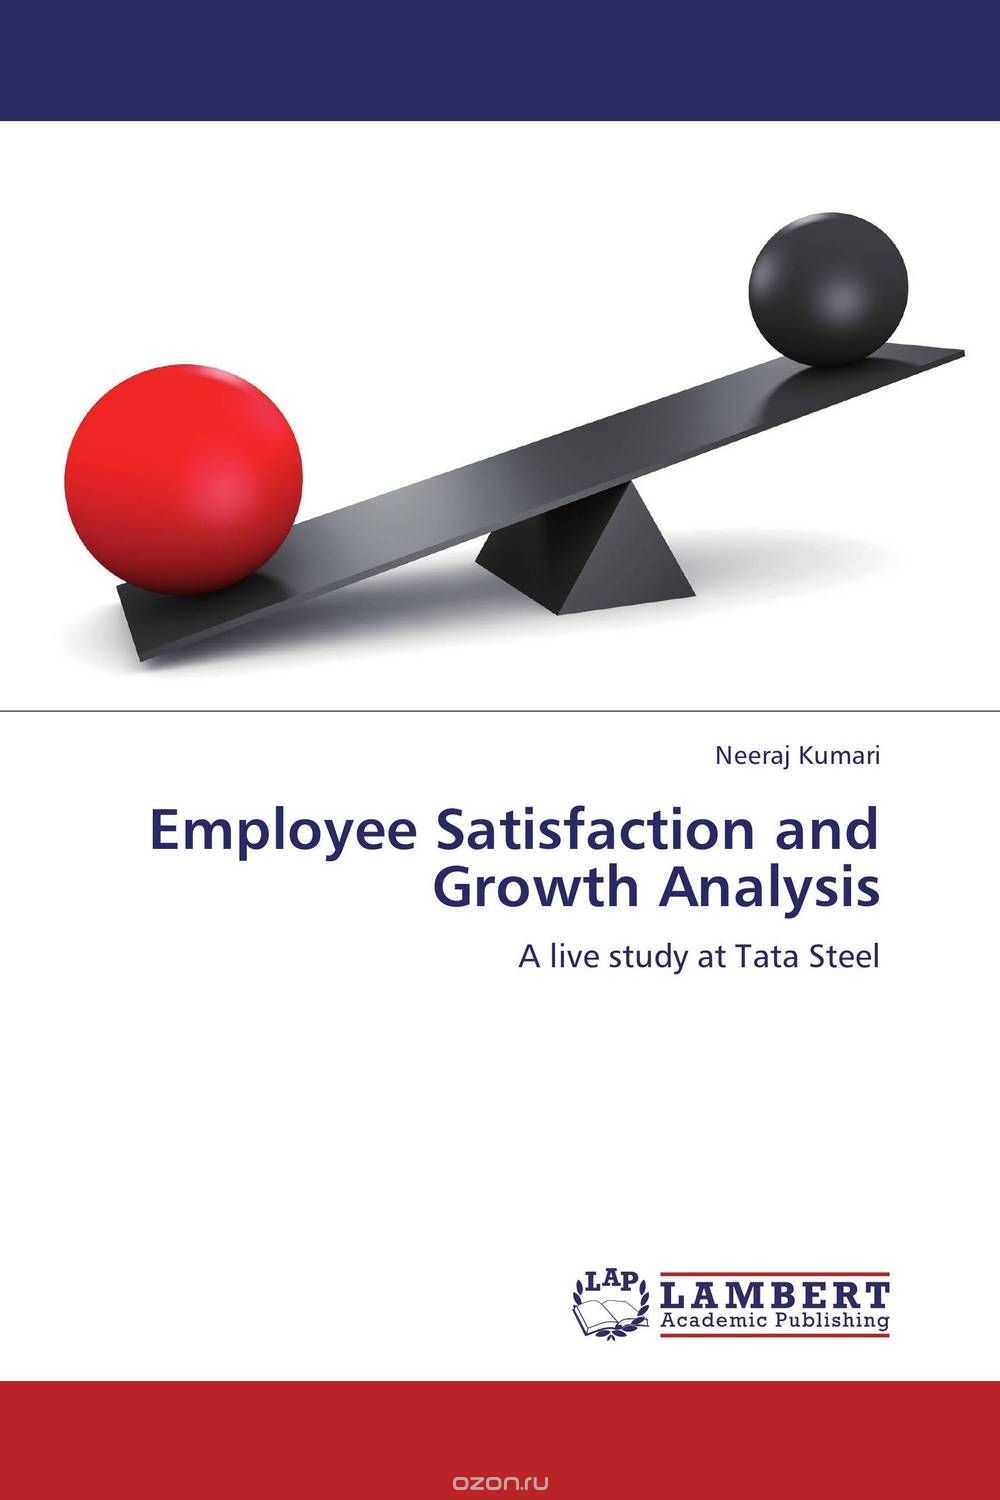 Скачать книгу "Employee Satisfaction and Growth Analysis"